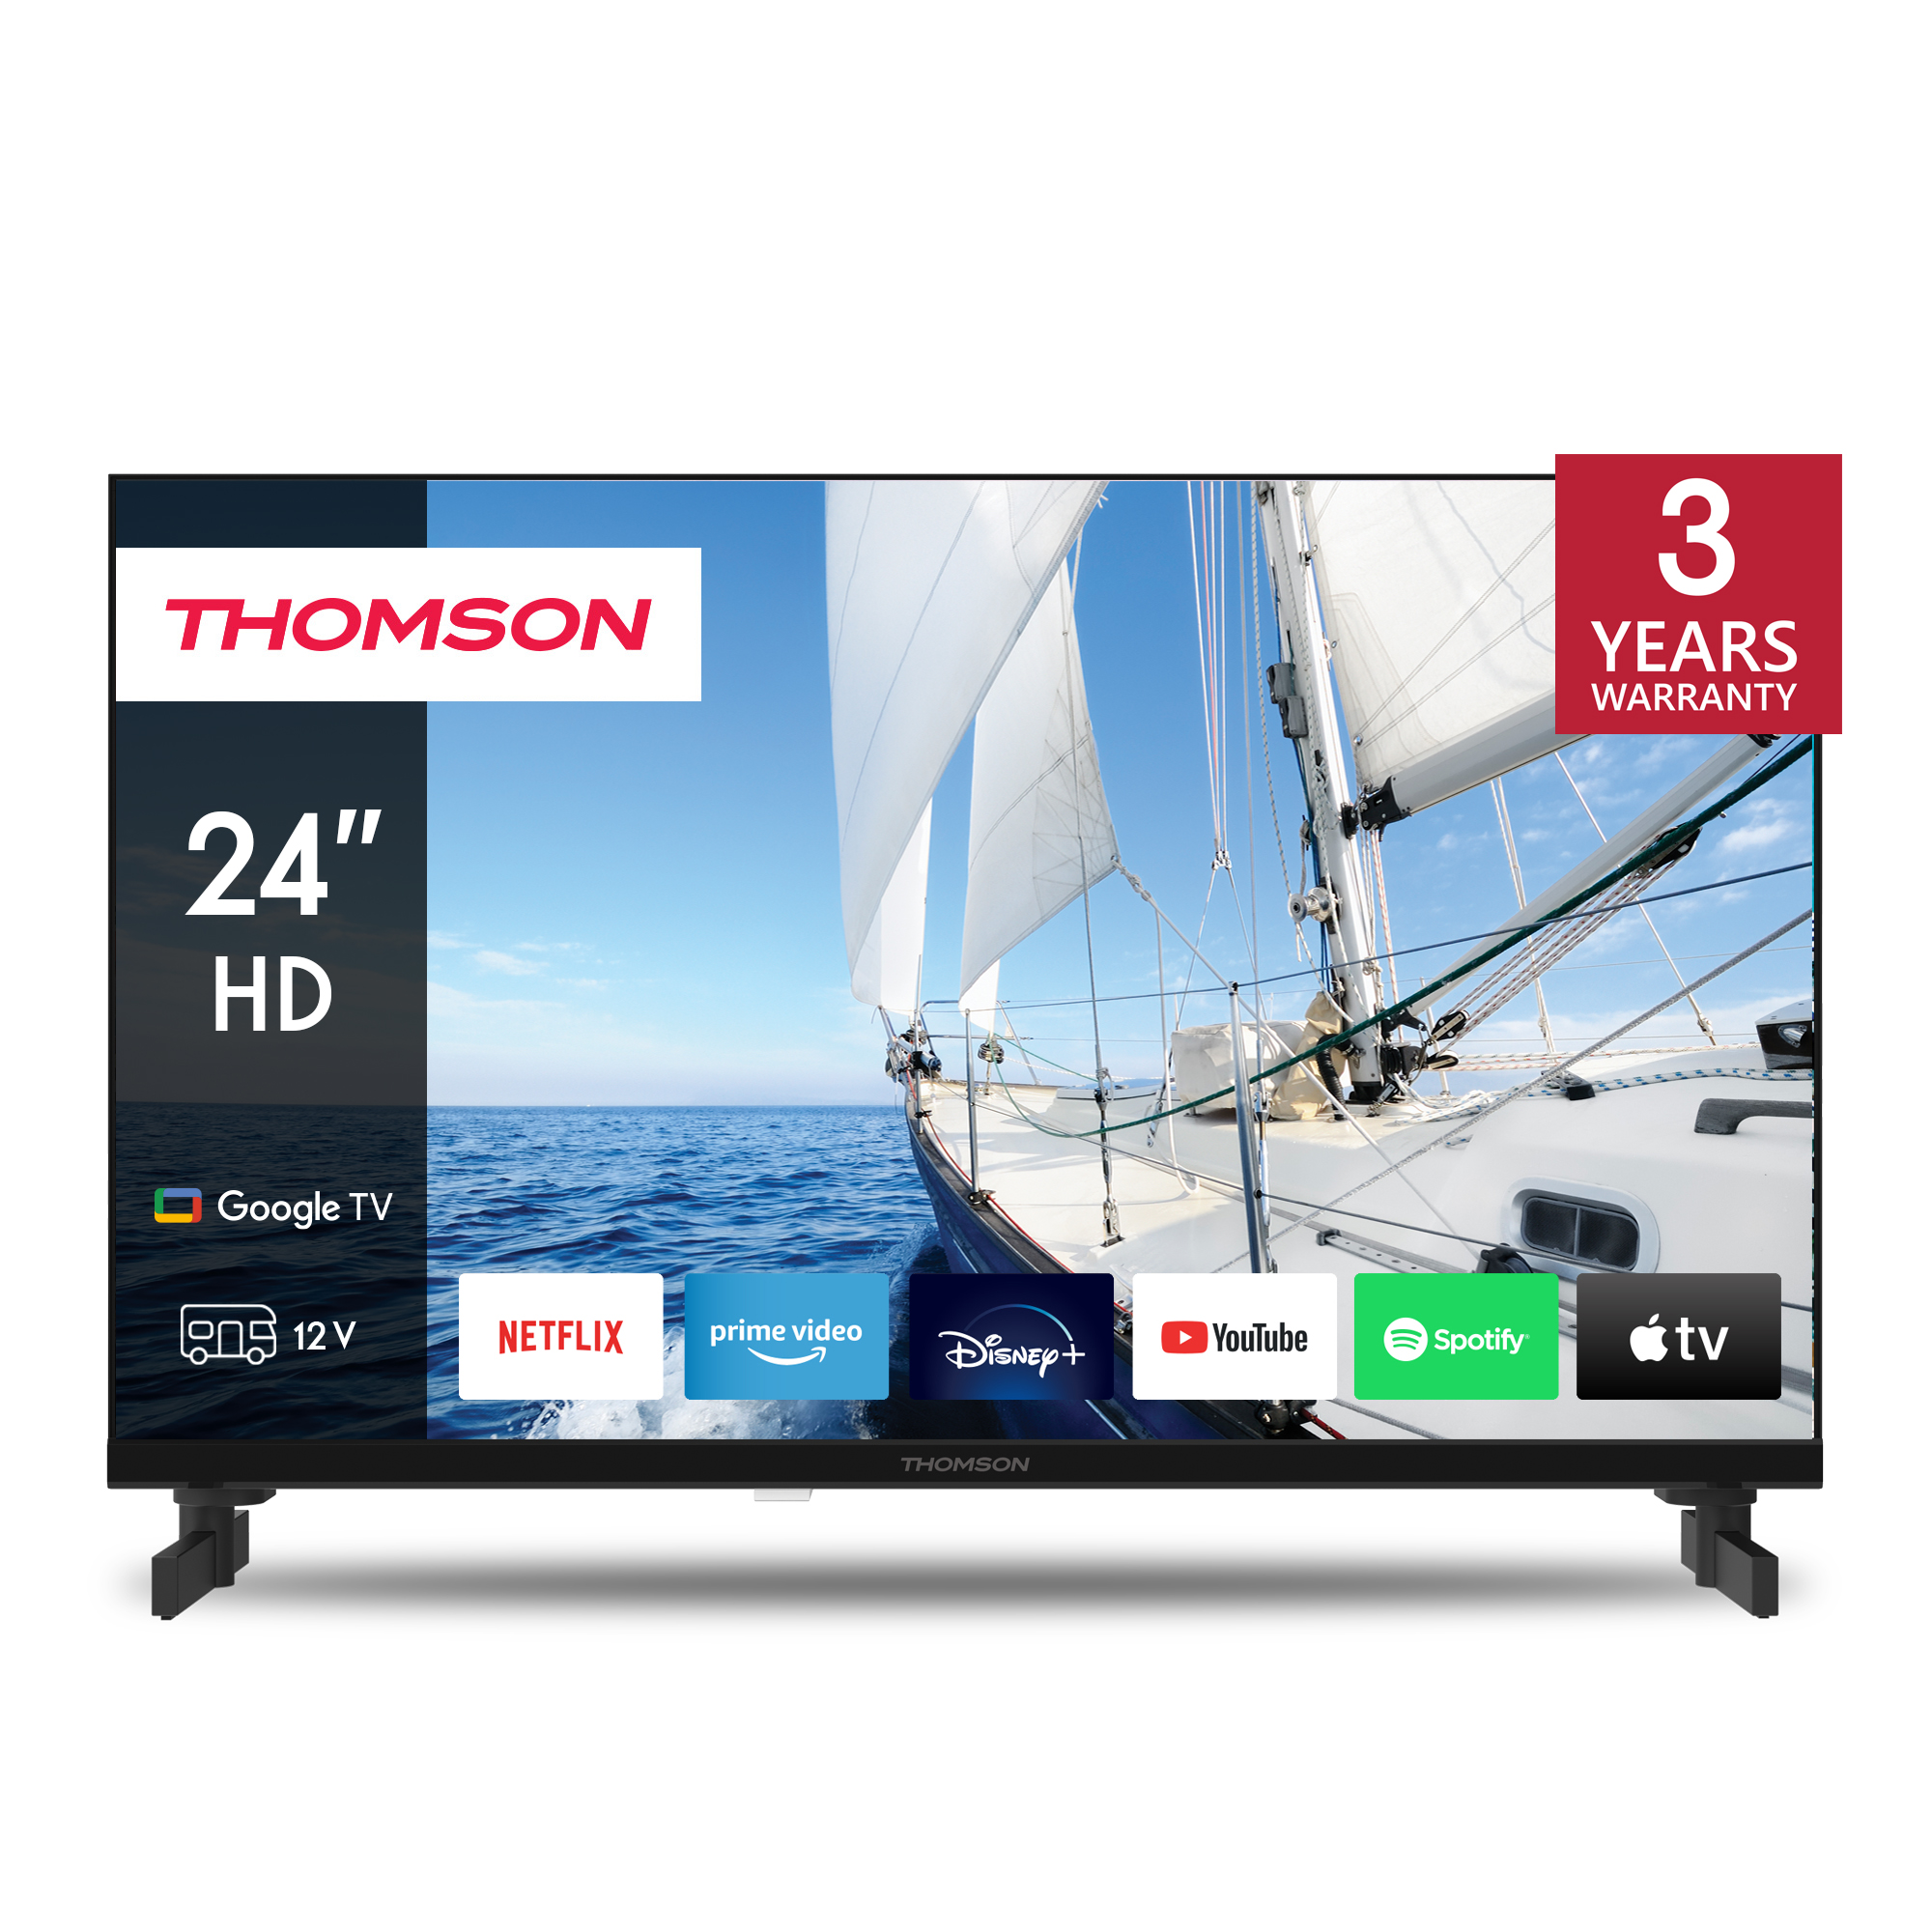 Thomson 24HG2S14C HD Google TV